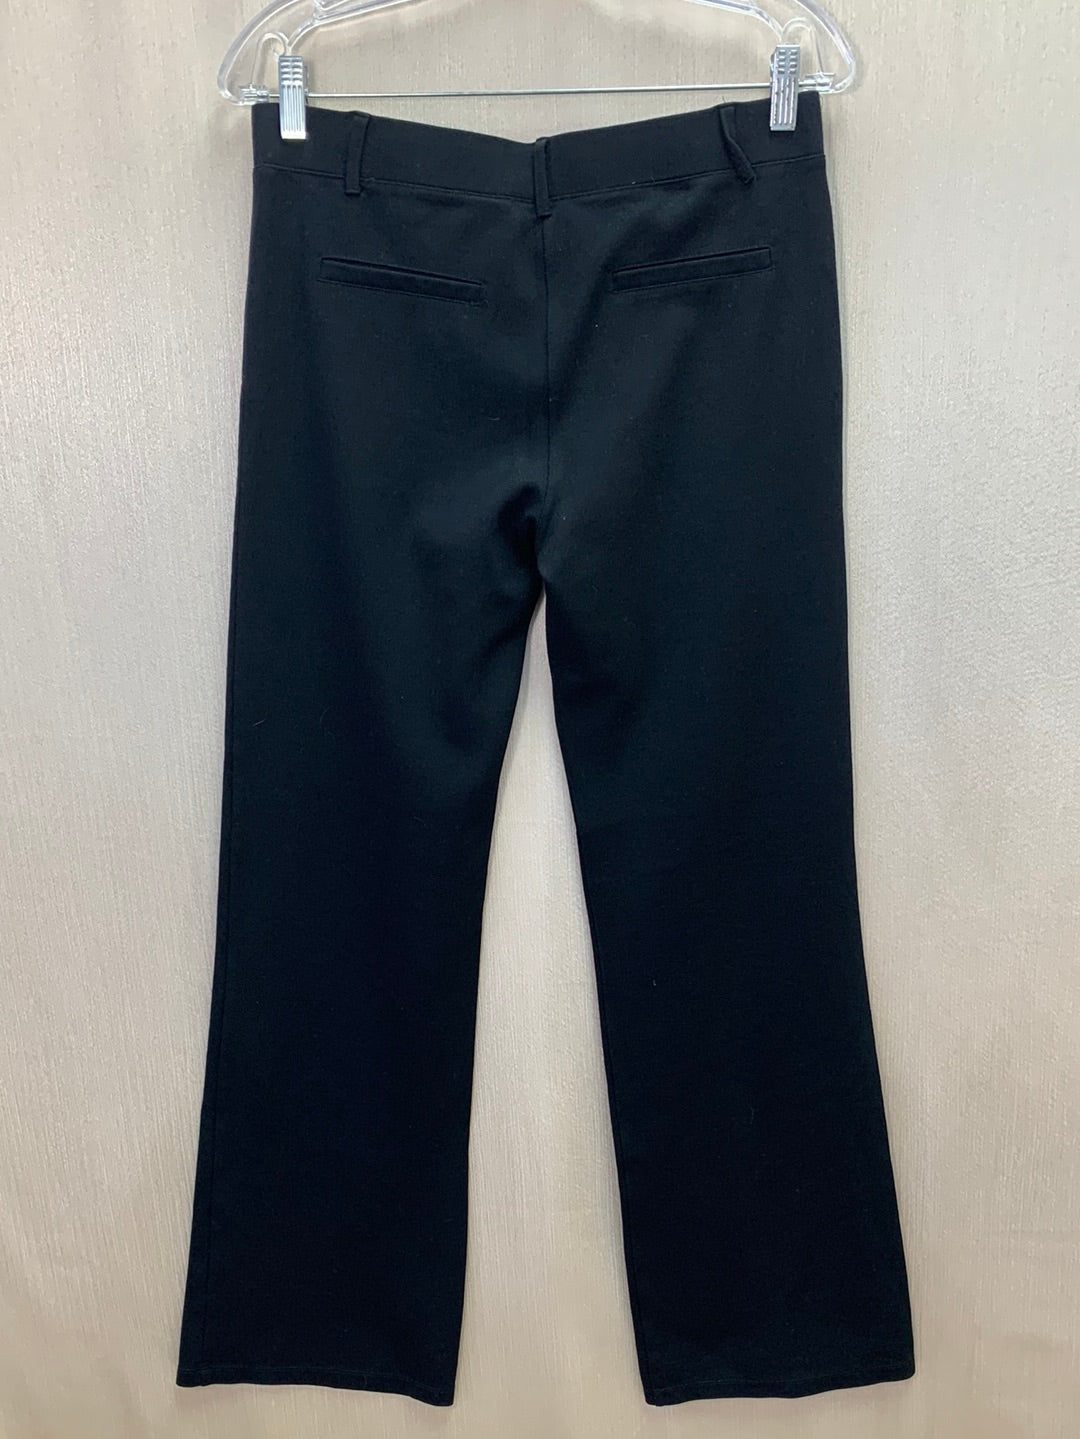 BETABRAND black shimmer Classic Bootcut Dress Yoga Pants - PM (flaw)